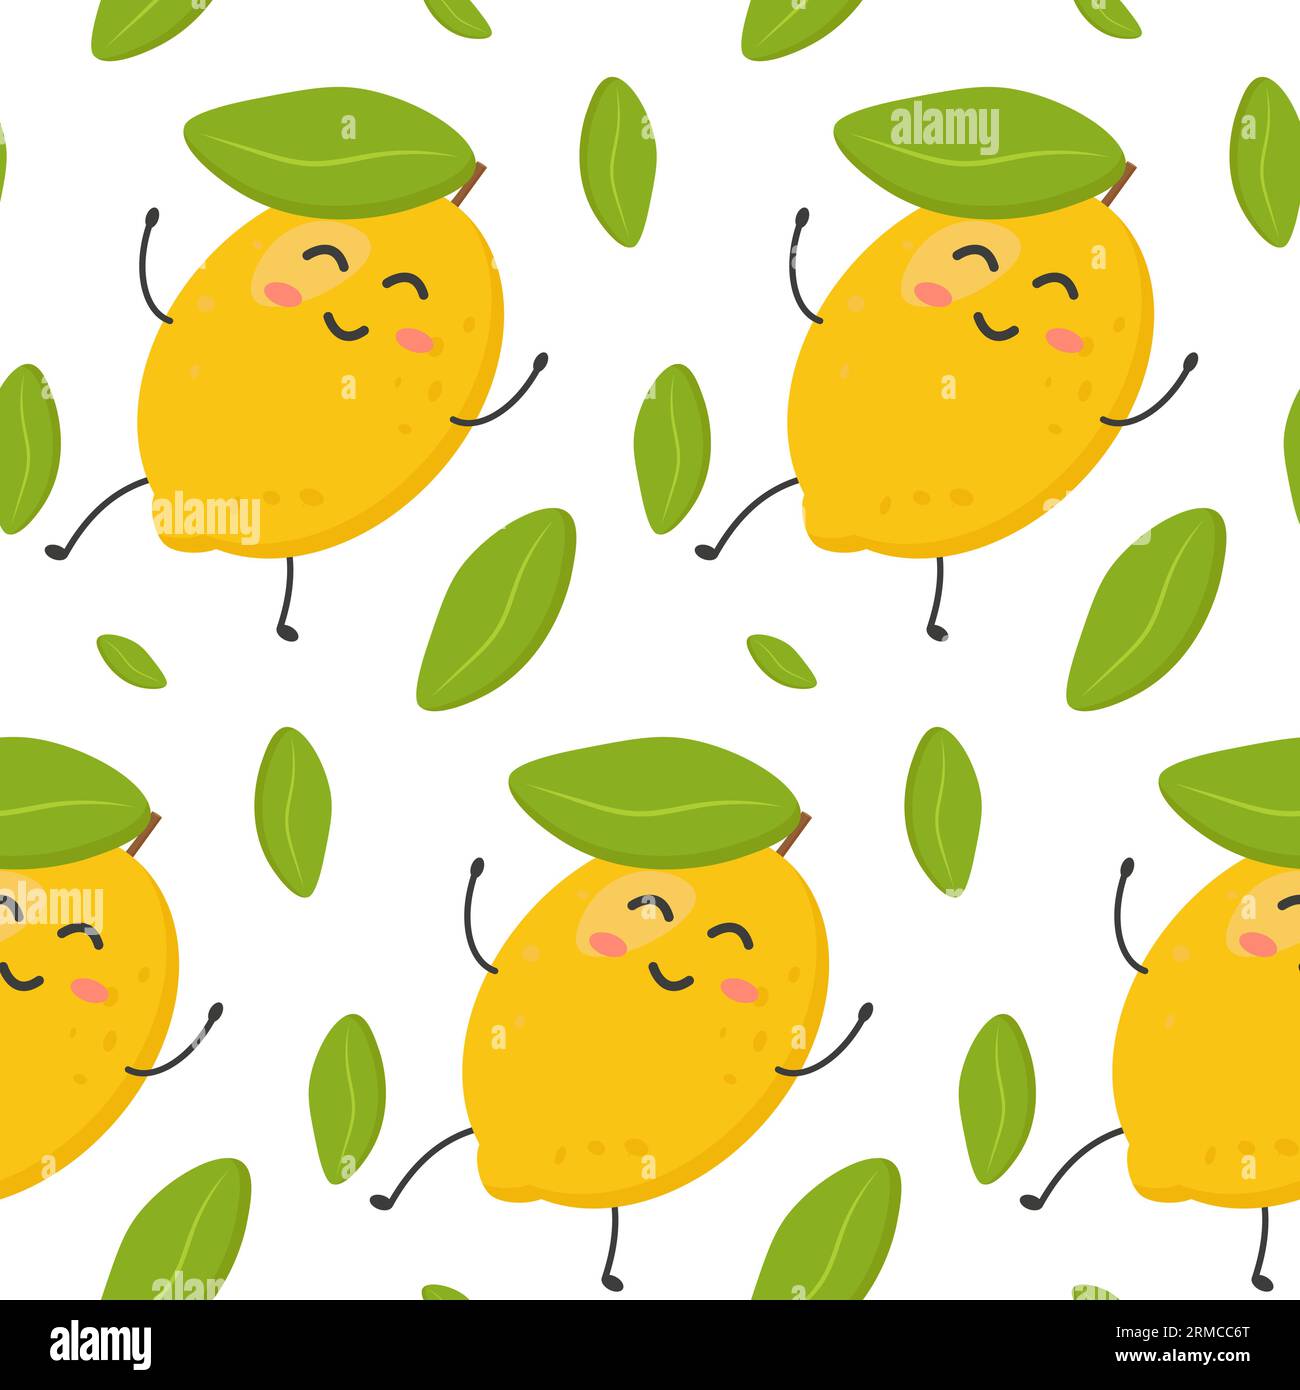 Seamless pattern of cute colorful yellow lemons. Lemons alternate with leaves. Banner, flyer, wallpaper, fabric design. Vector flat illustration. Stock Vector